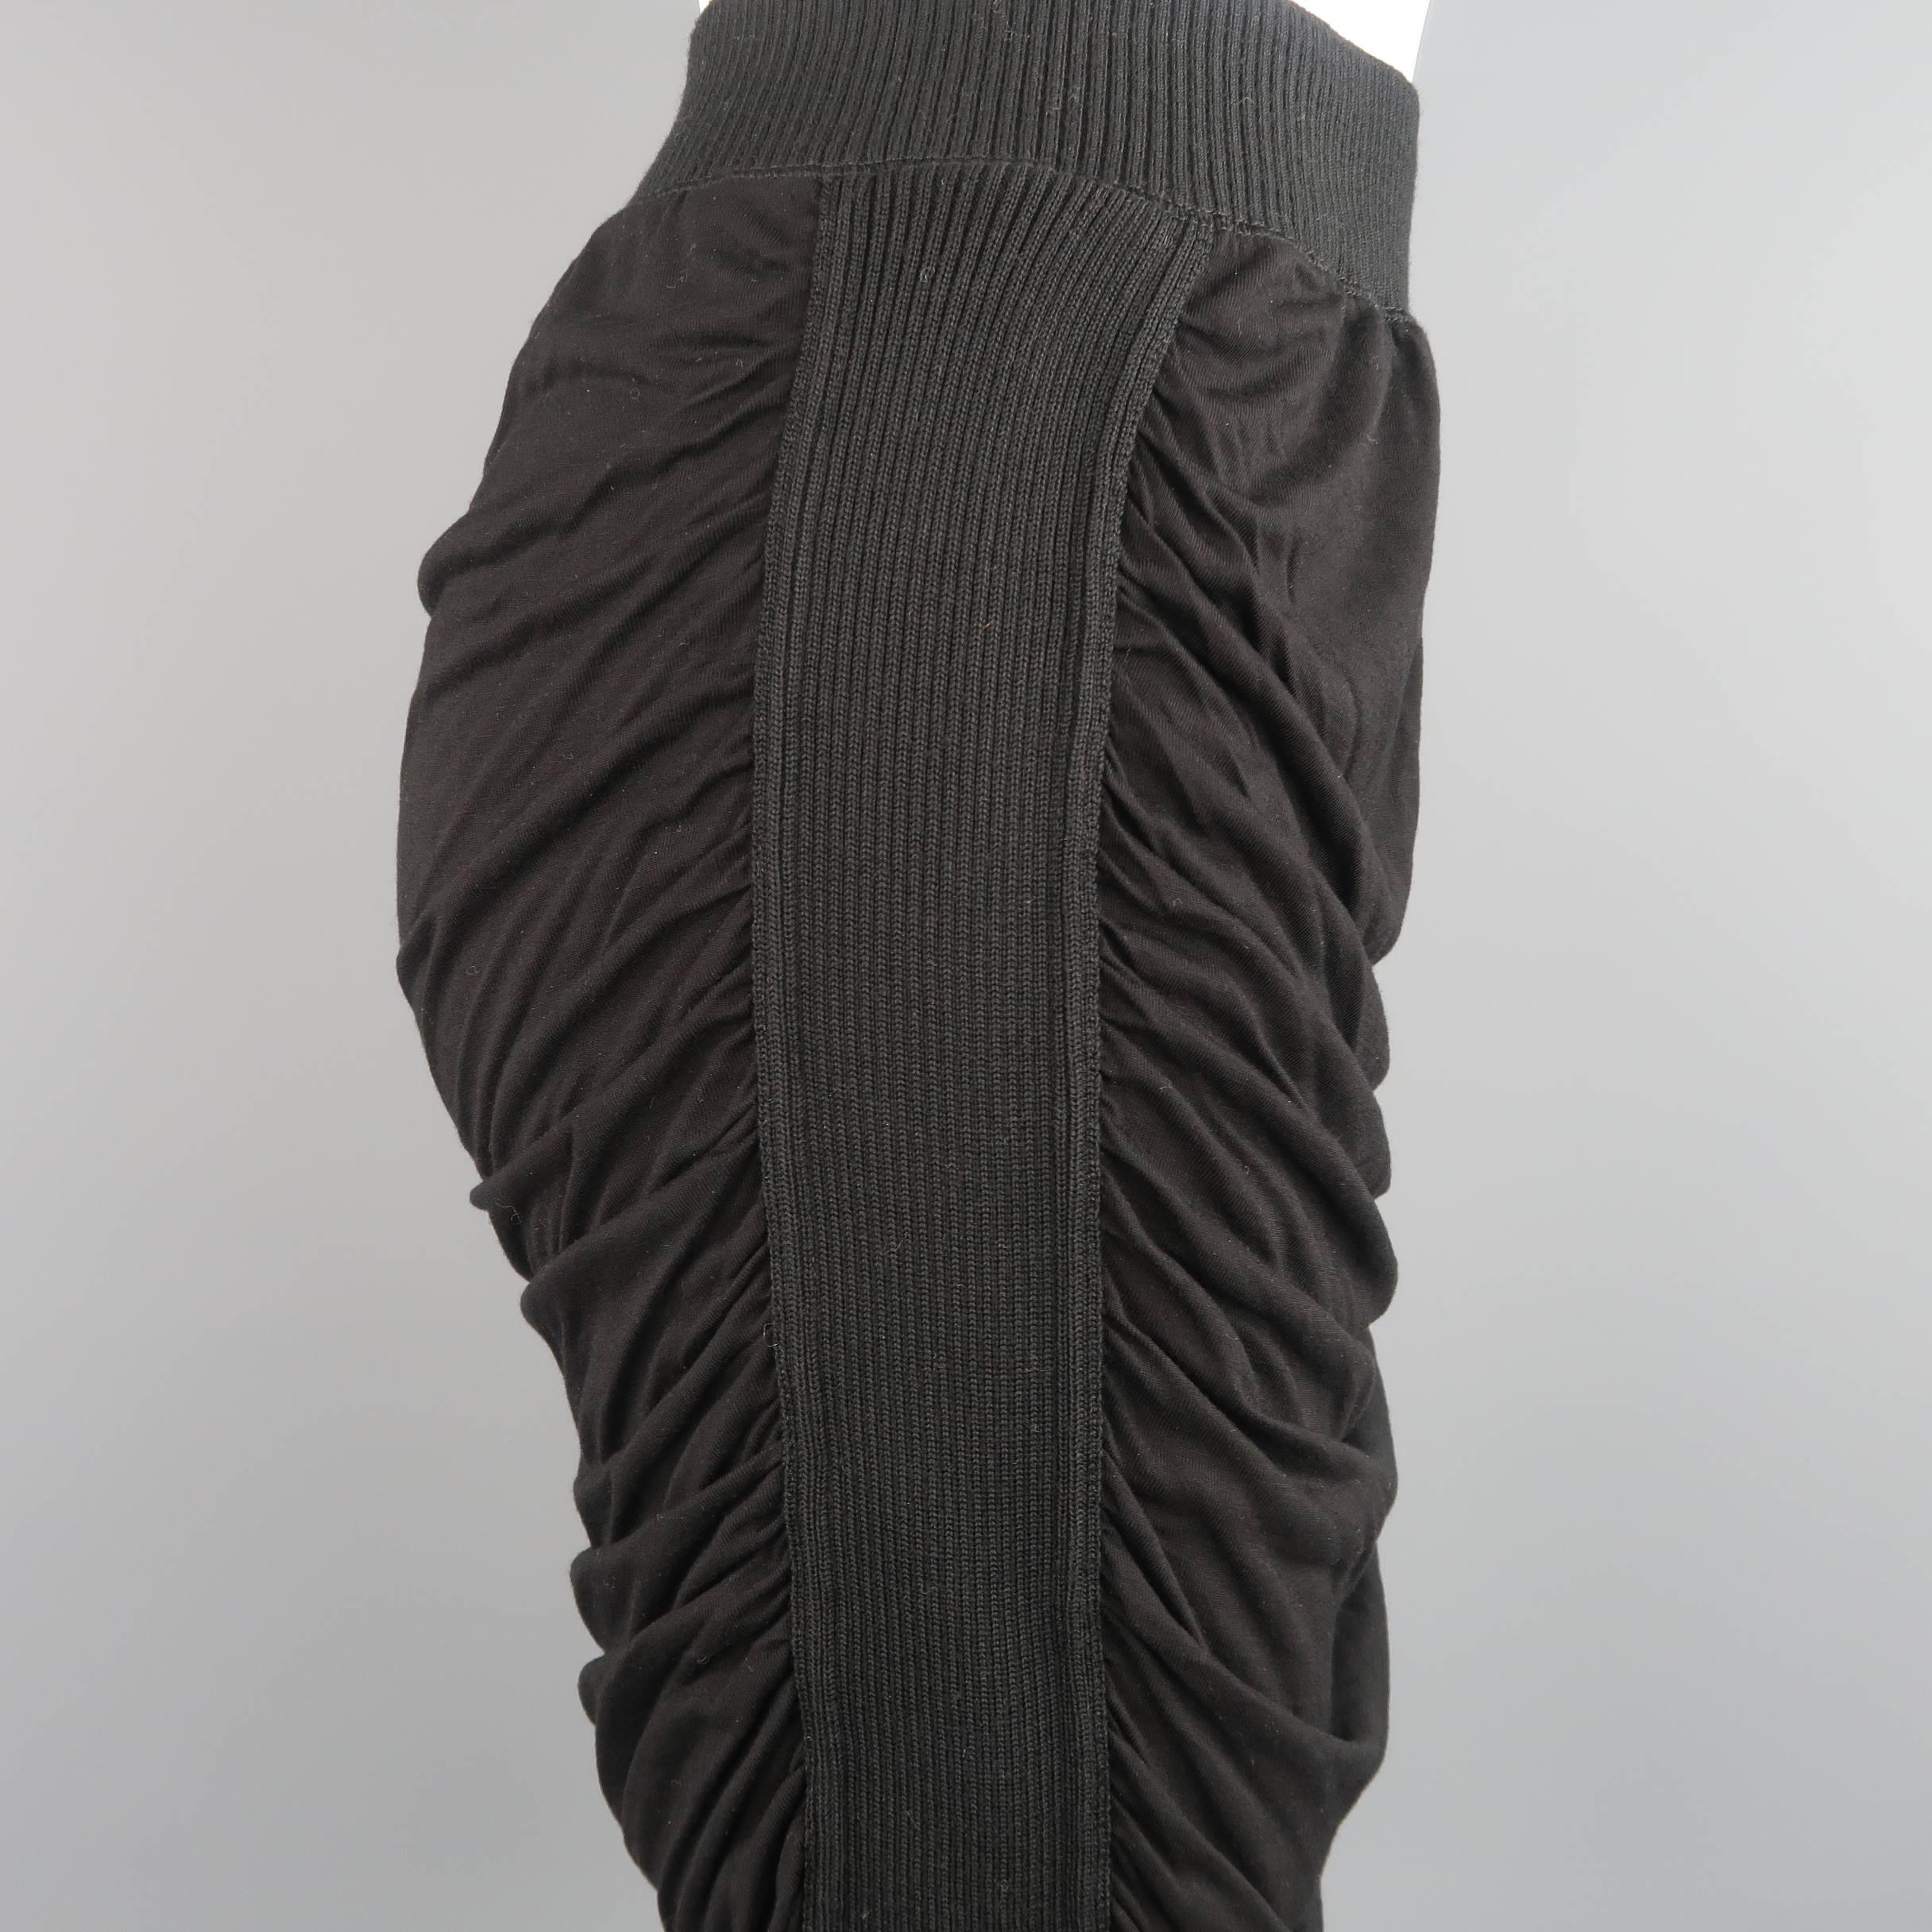 Jean Paul Gaultier Ruched Black Viscose Blend Ribbed Side Pencil Skirt 1